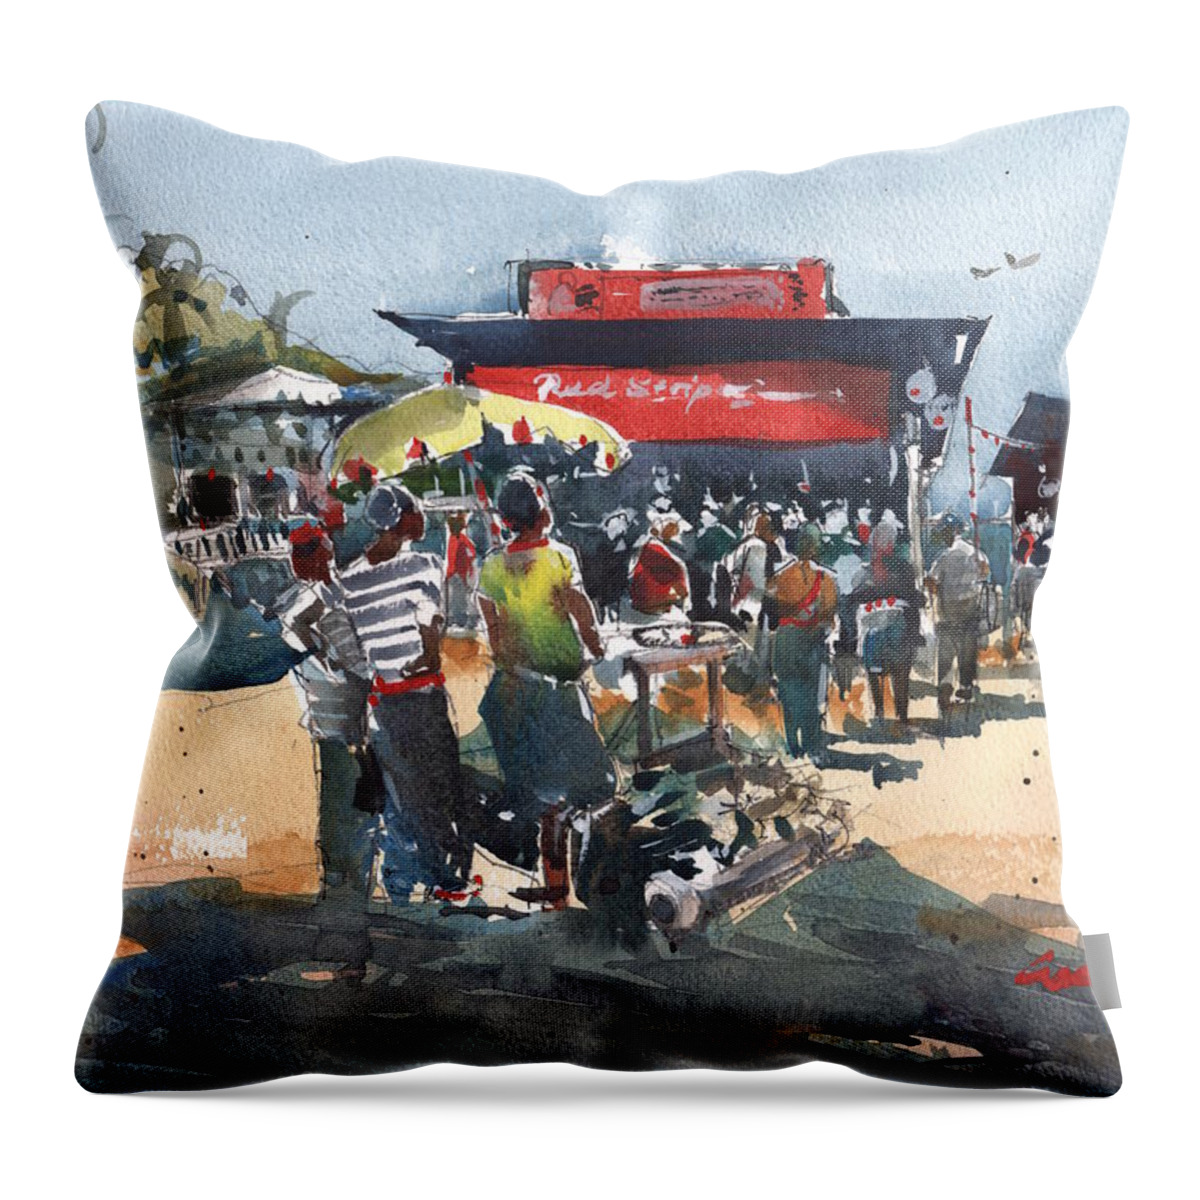 Jamaica Throw Pillow featuring the painting Beach show Jamaica by Gaston McKenzie